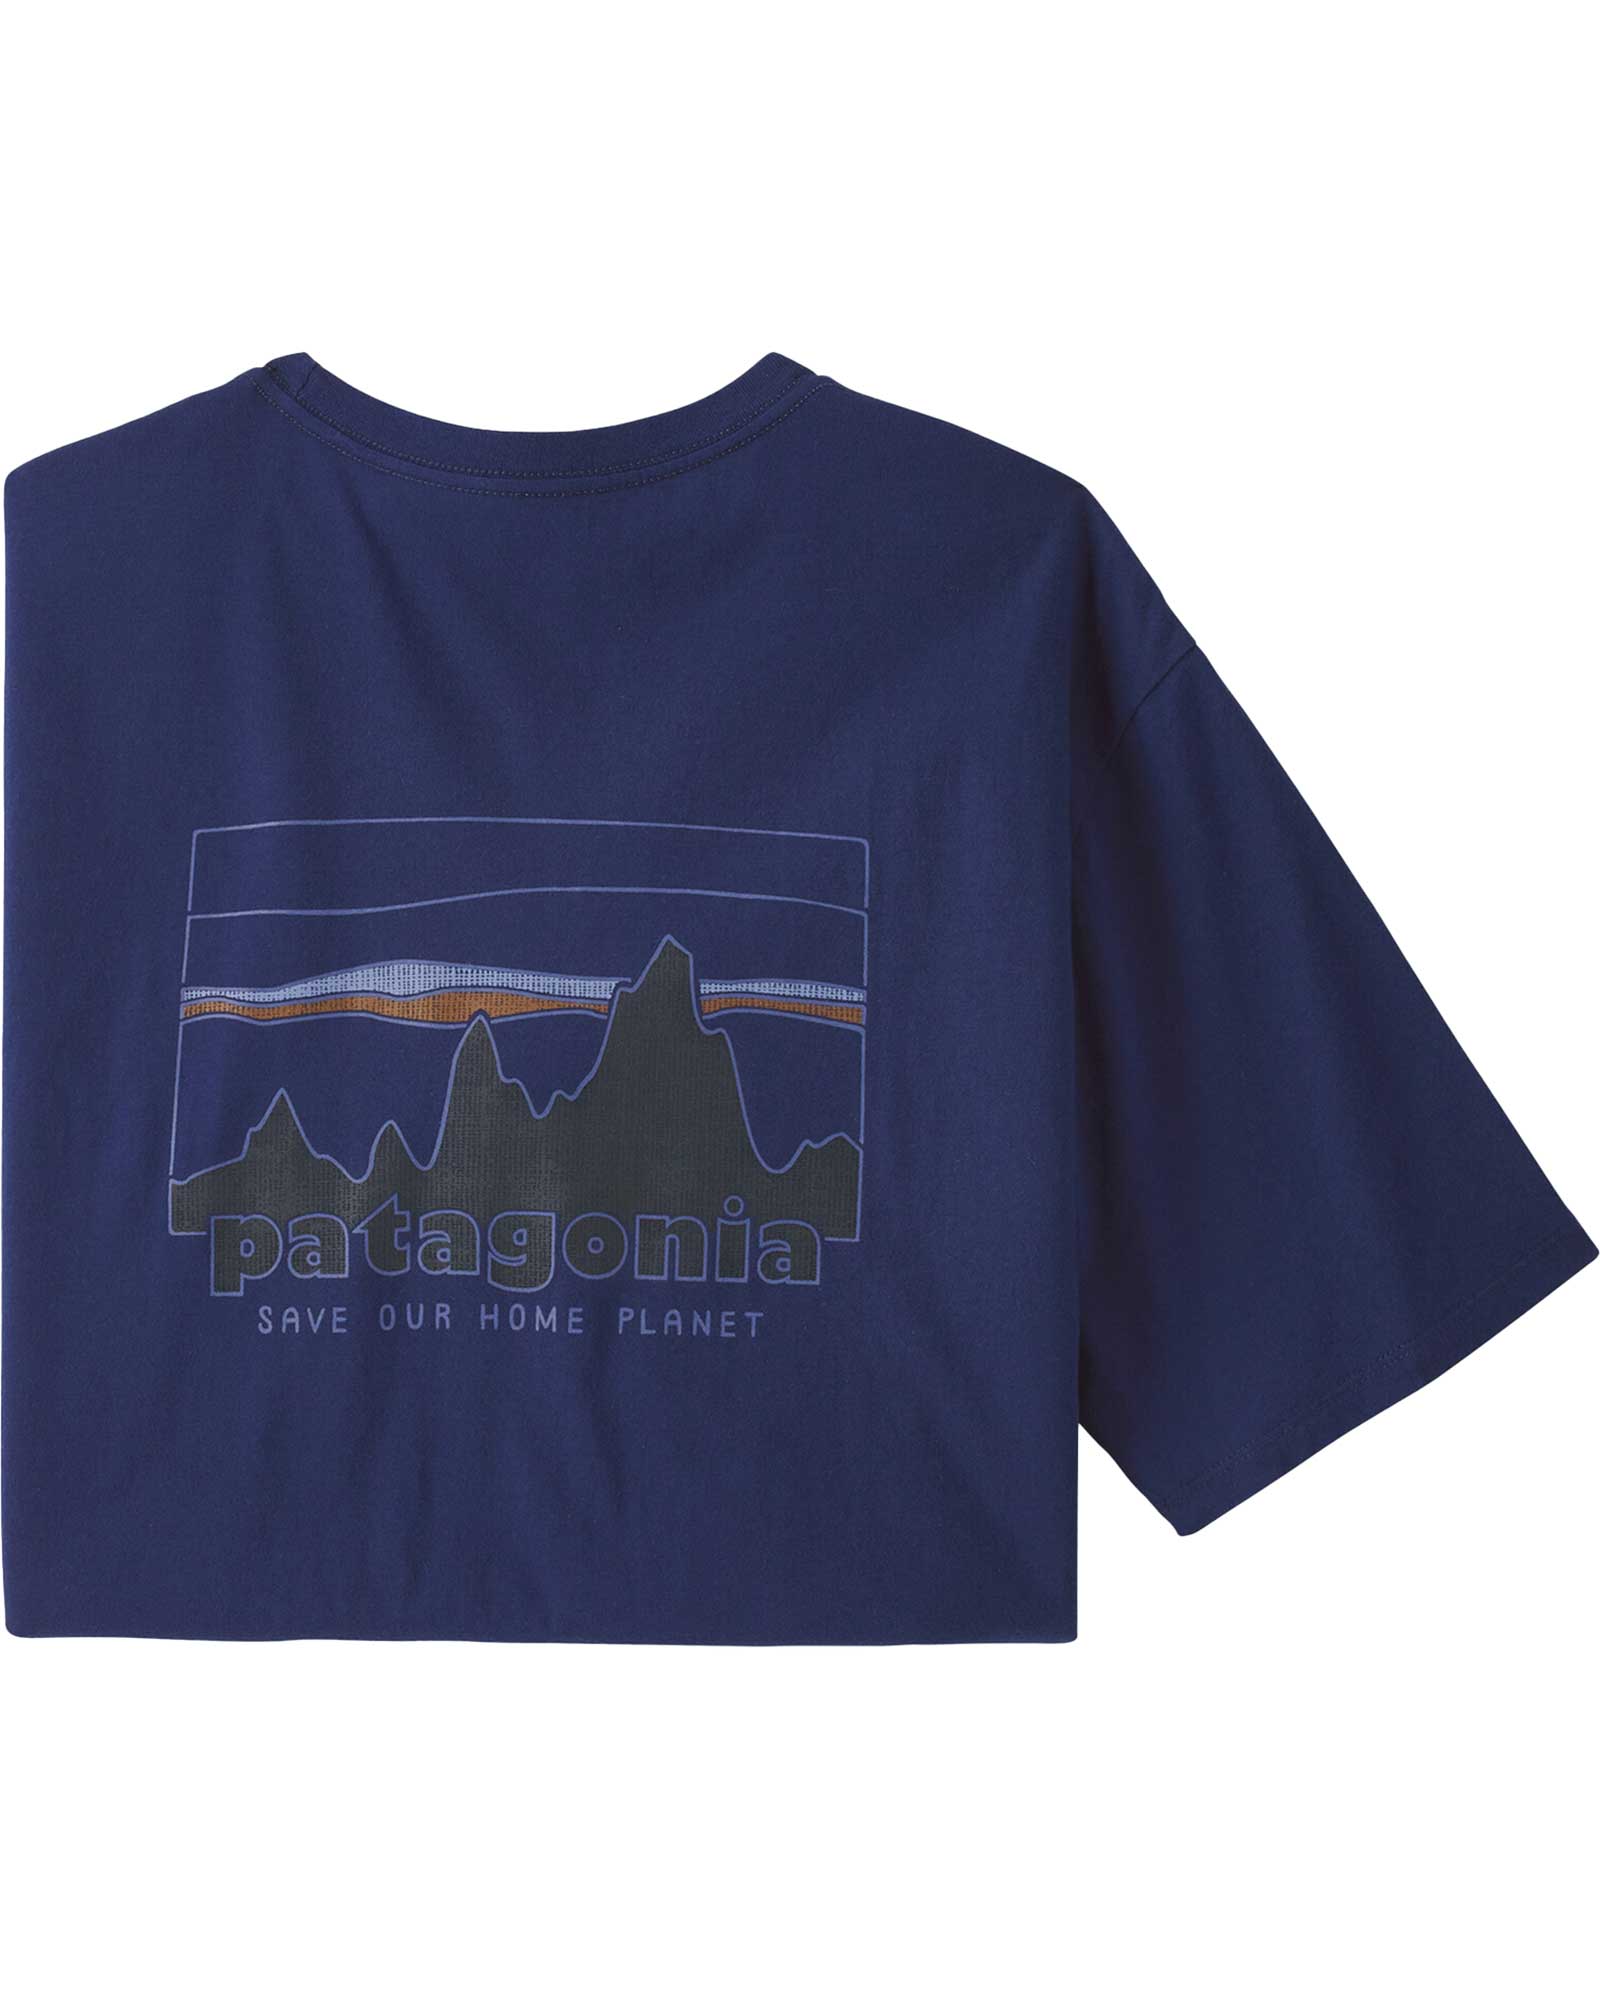 Patagonia Men’s ’73 Skyline Responsibili Tee - Sound Blue L